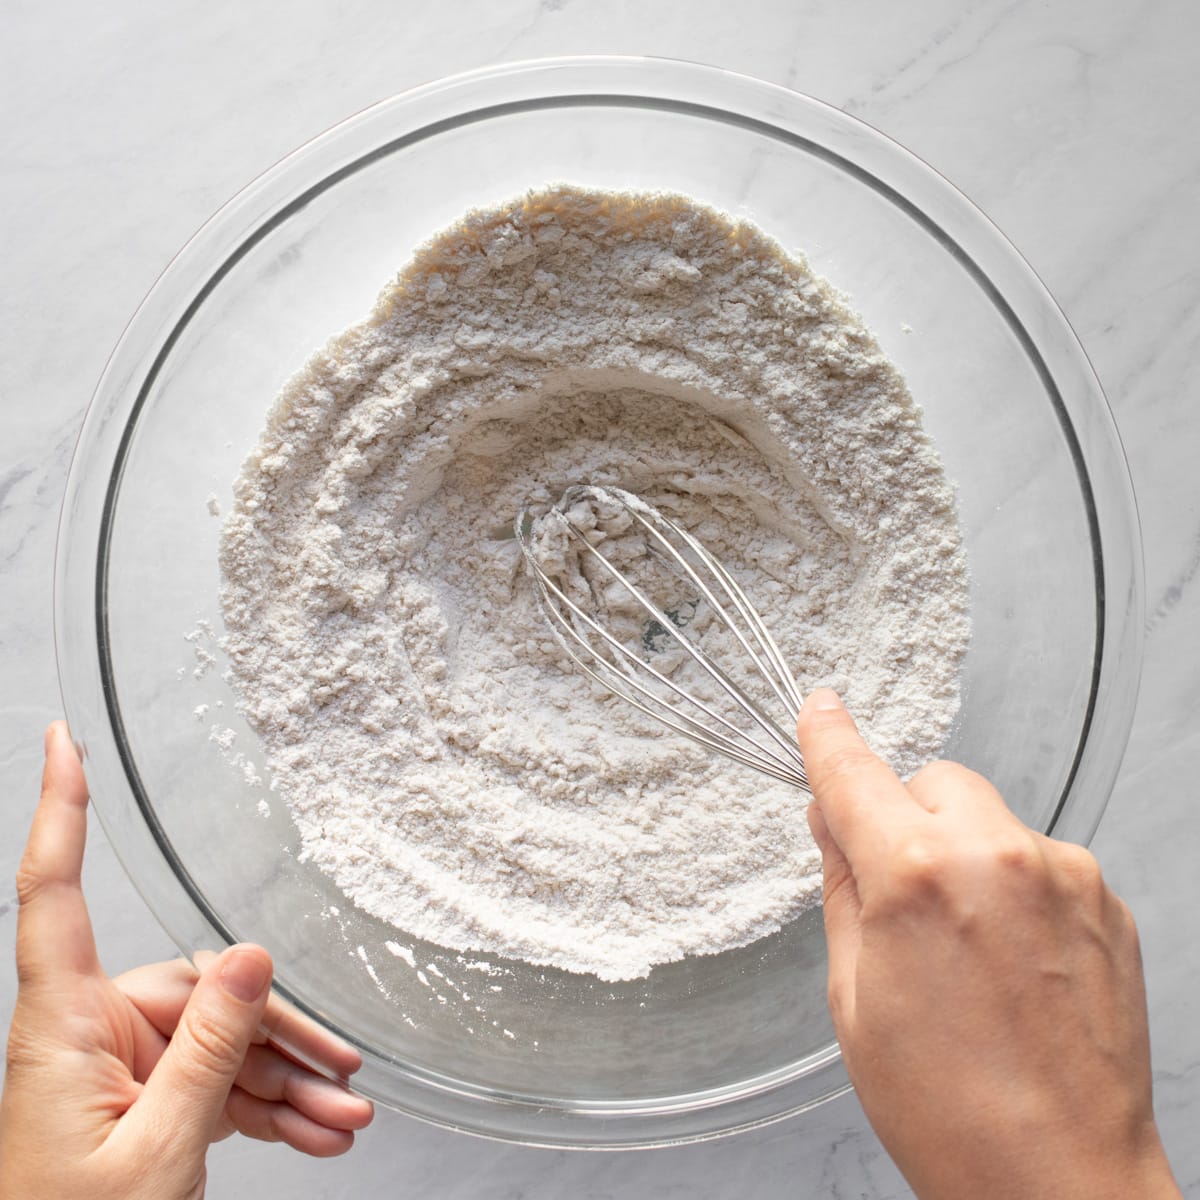 Whisking gluten-free flour, baking powder, and salt.